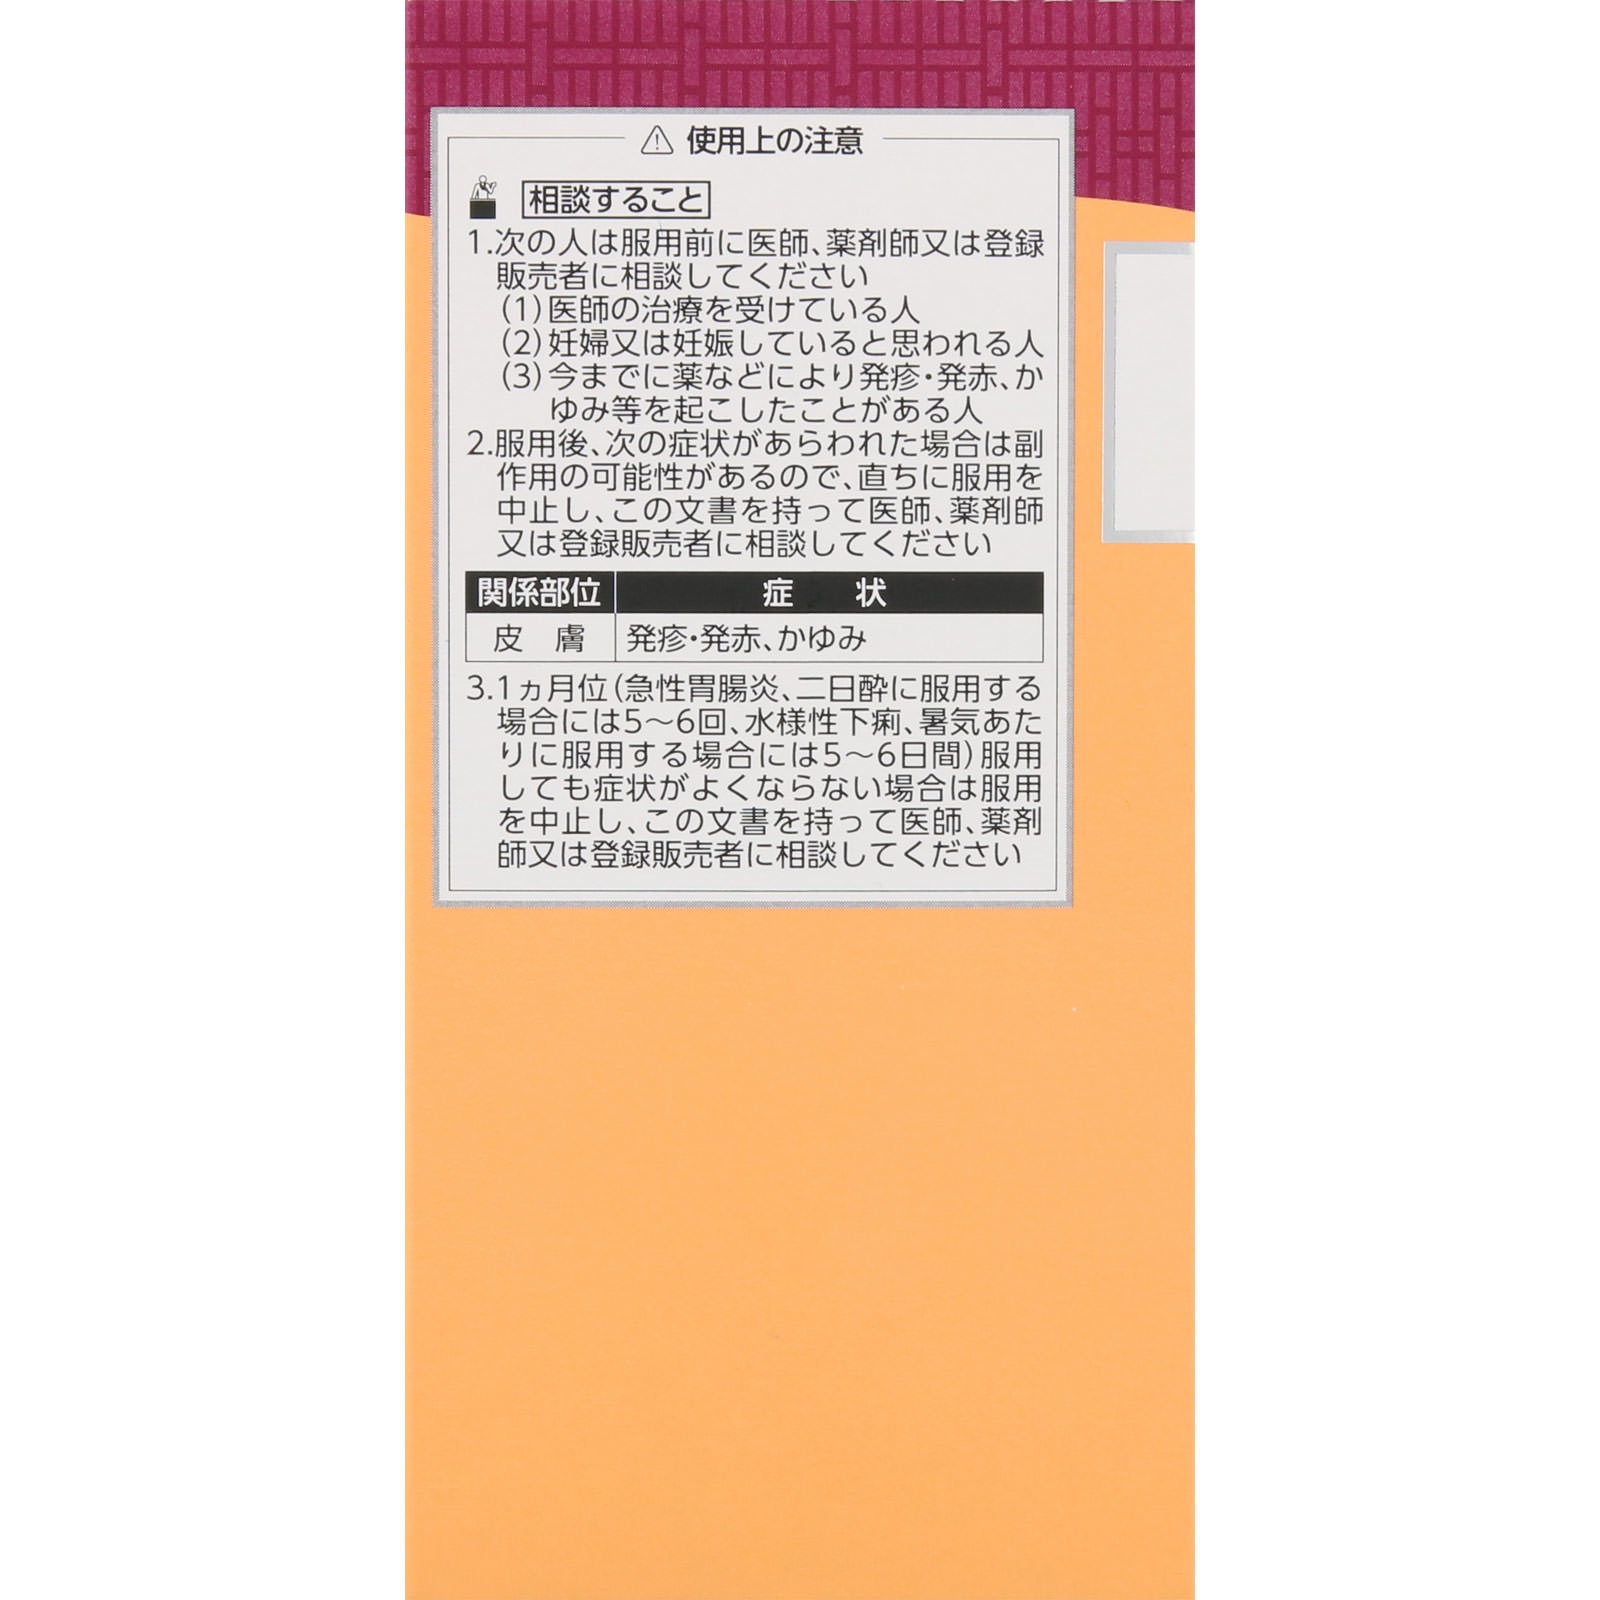 クラシエ」五苓散錠 240錠 【第二類医薬品】: 医薬品・衛生用品